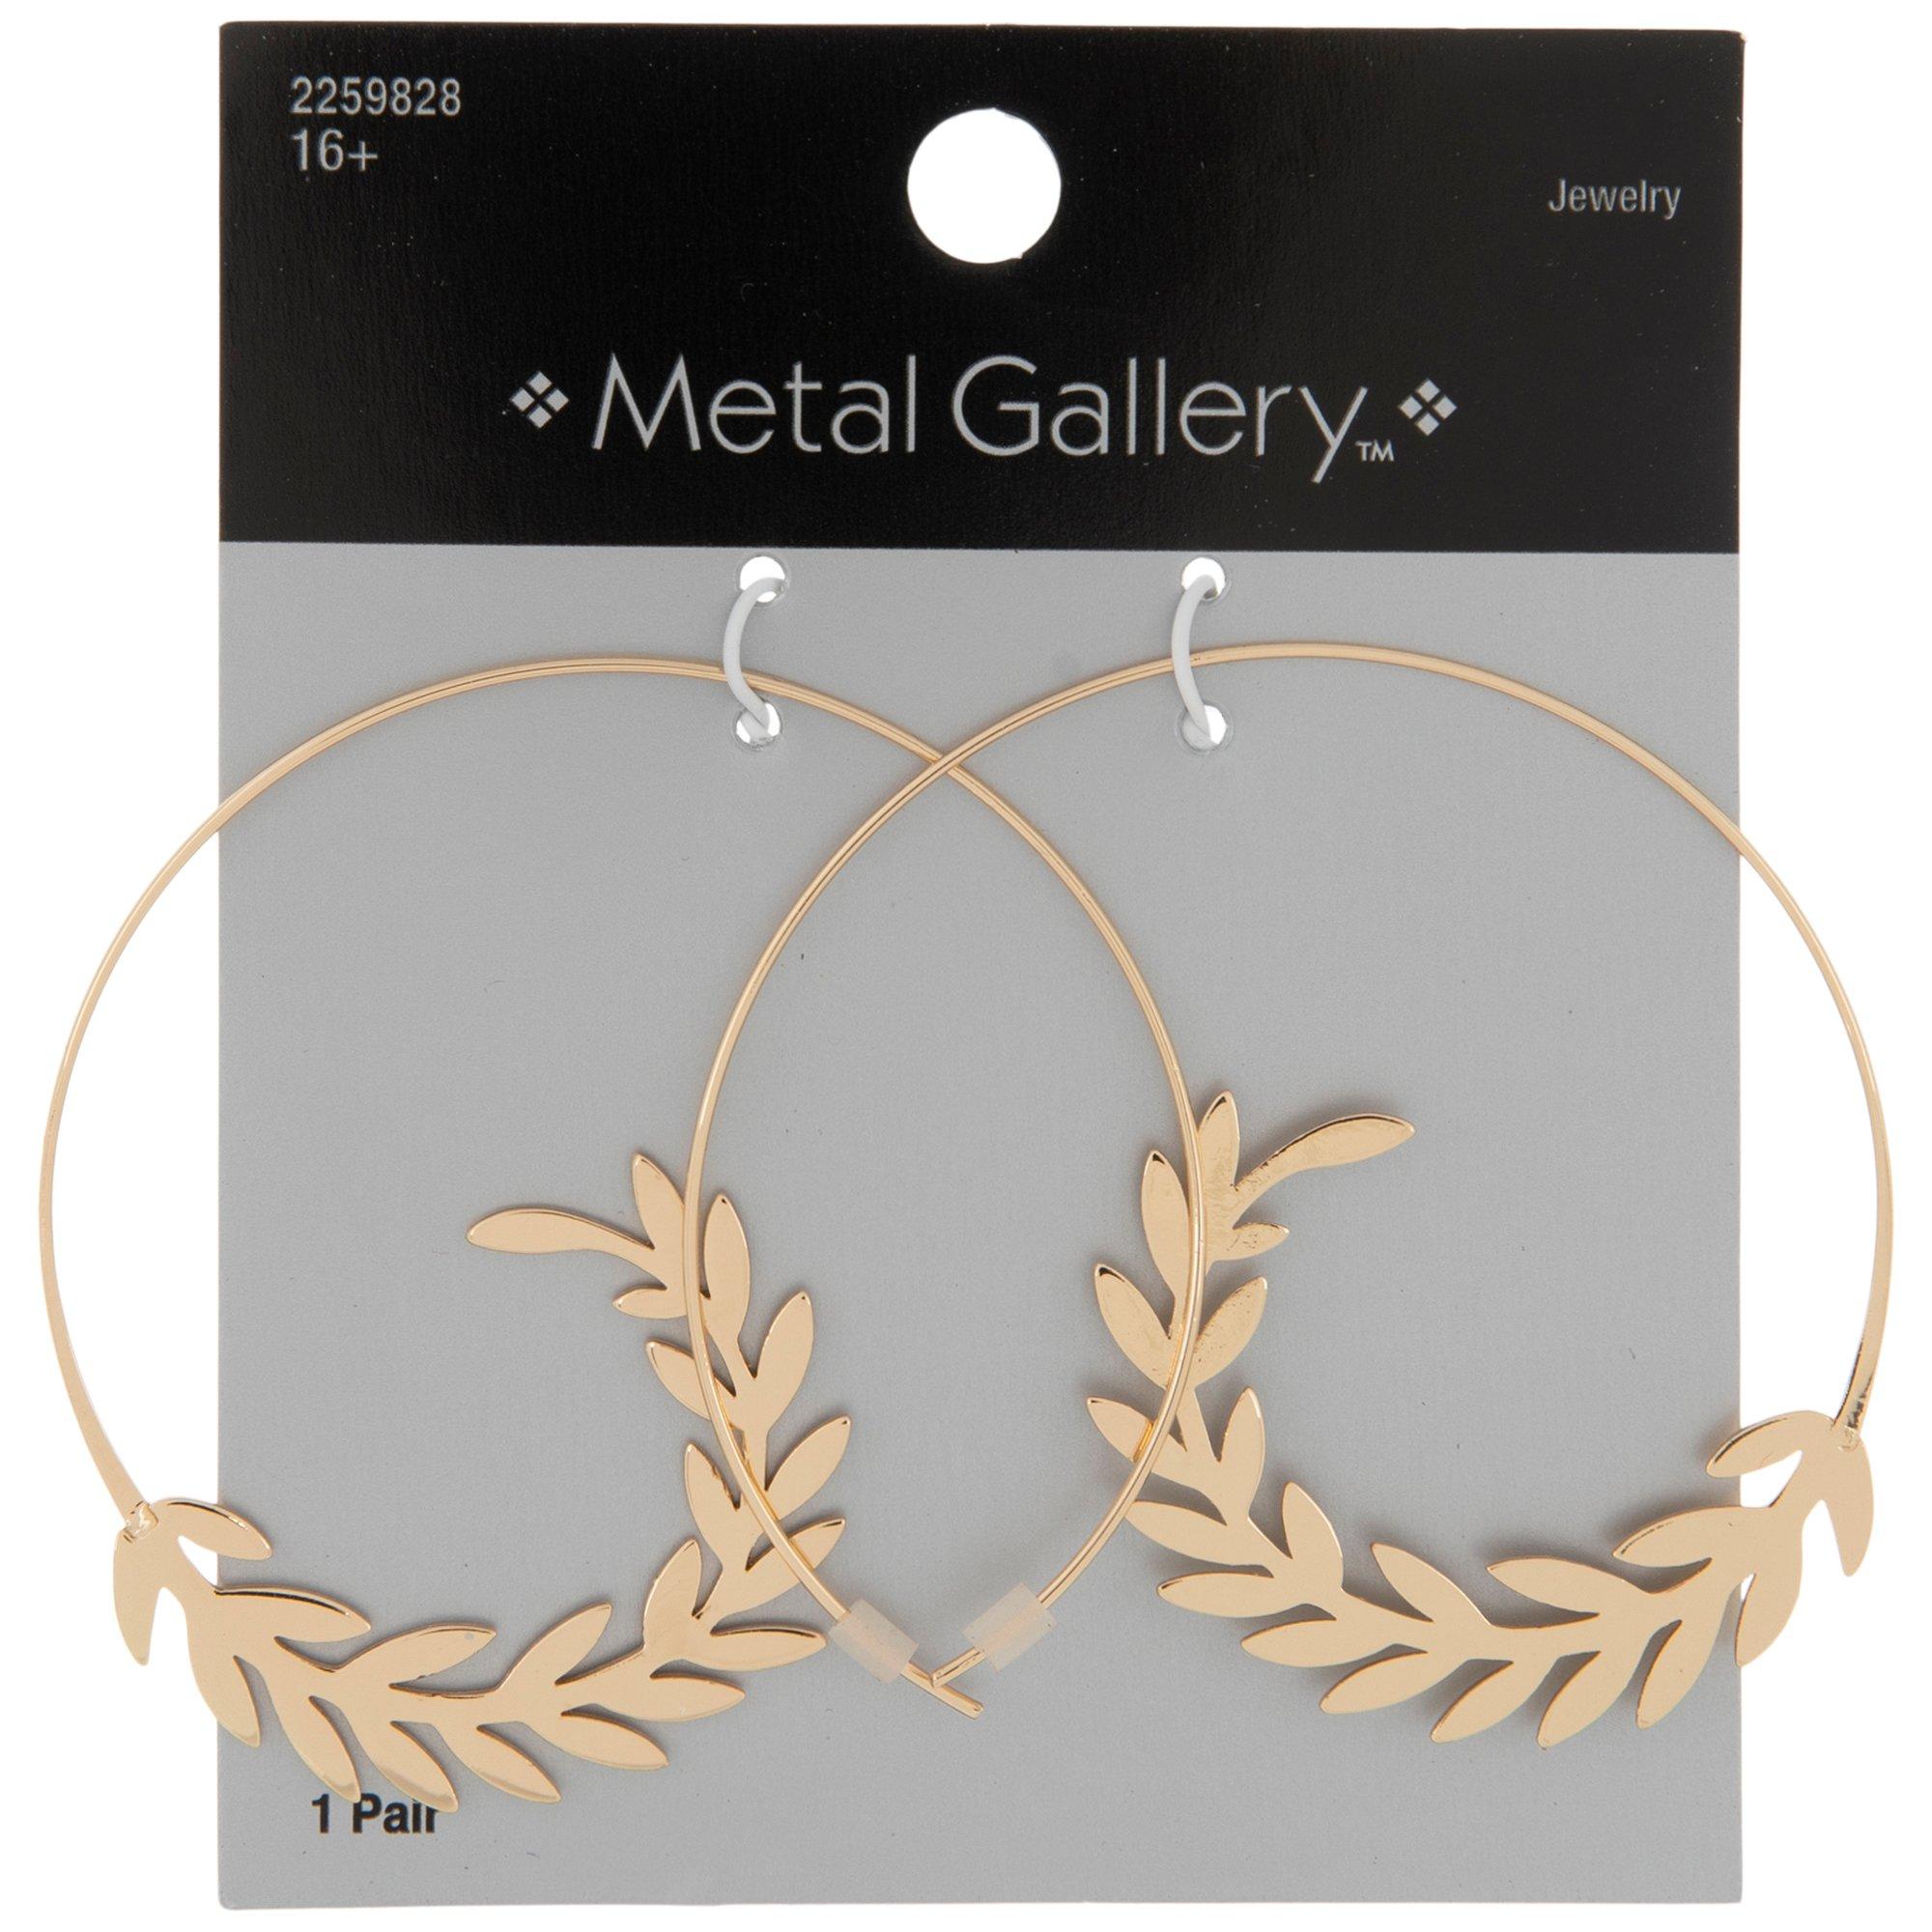 HOHIYA Macrame Ring Floral Hoop Wreath Metal DIY for Christmas 14 inch Gold